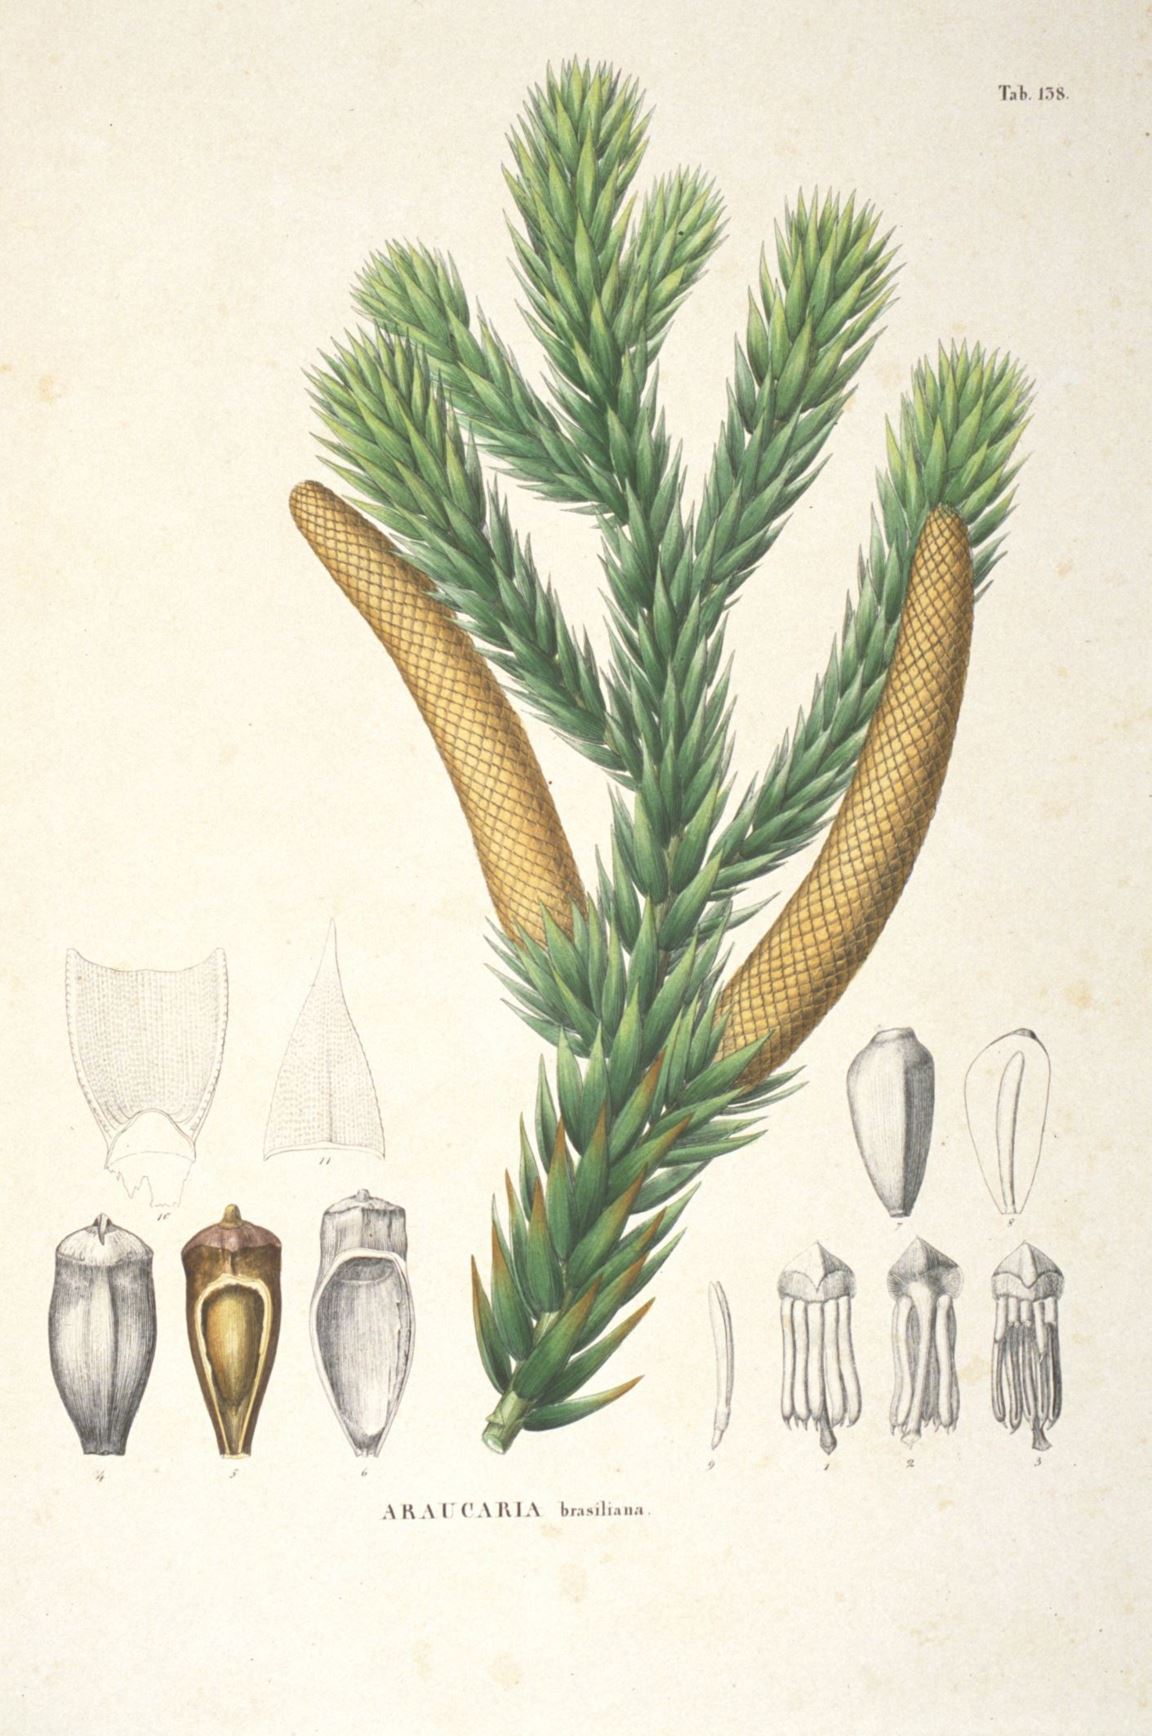 Araucaria angustifolia - Paraná pine, Candelabra tree, Brazilian pine